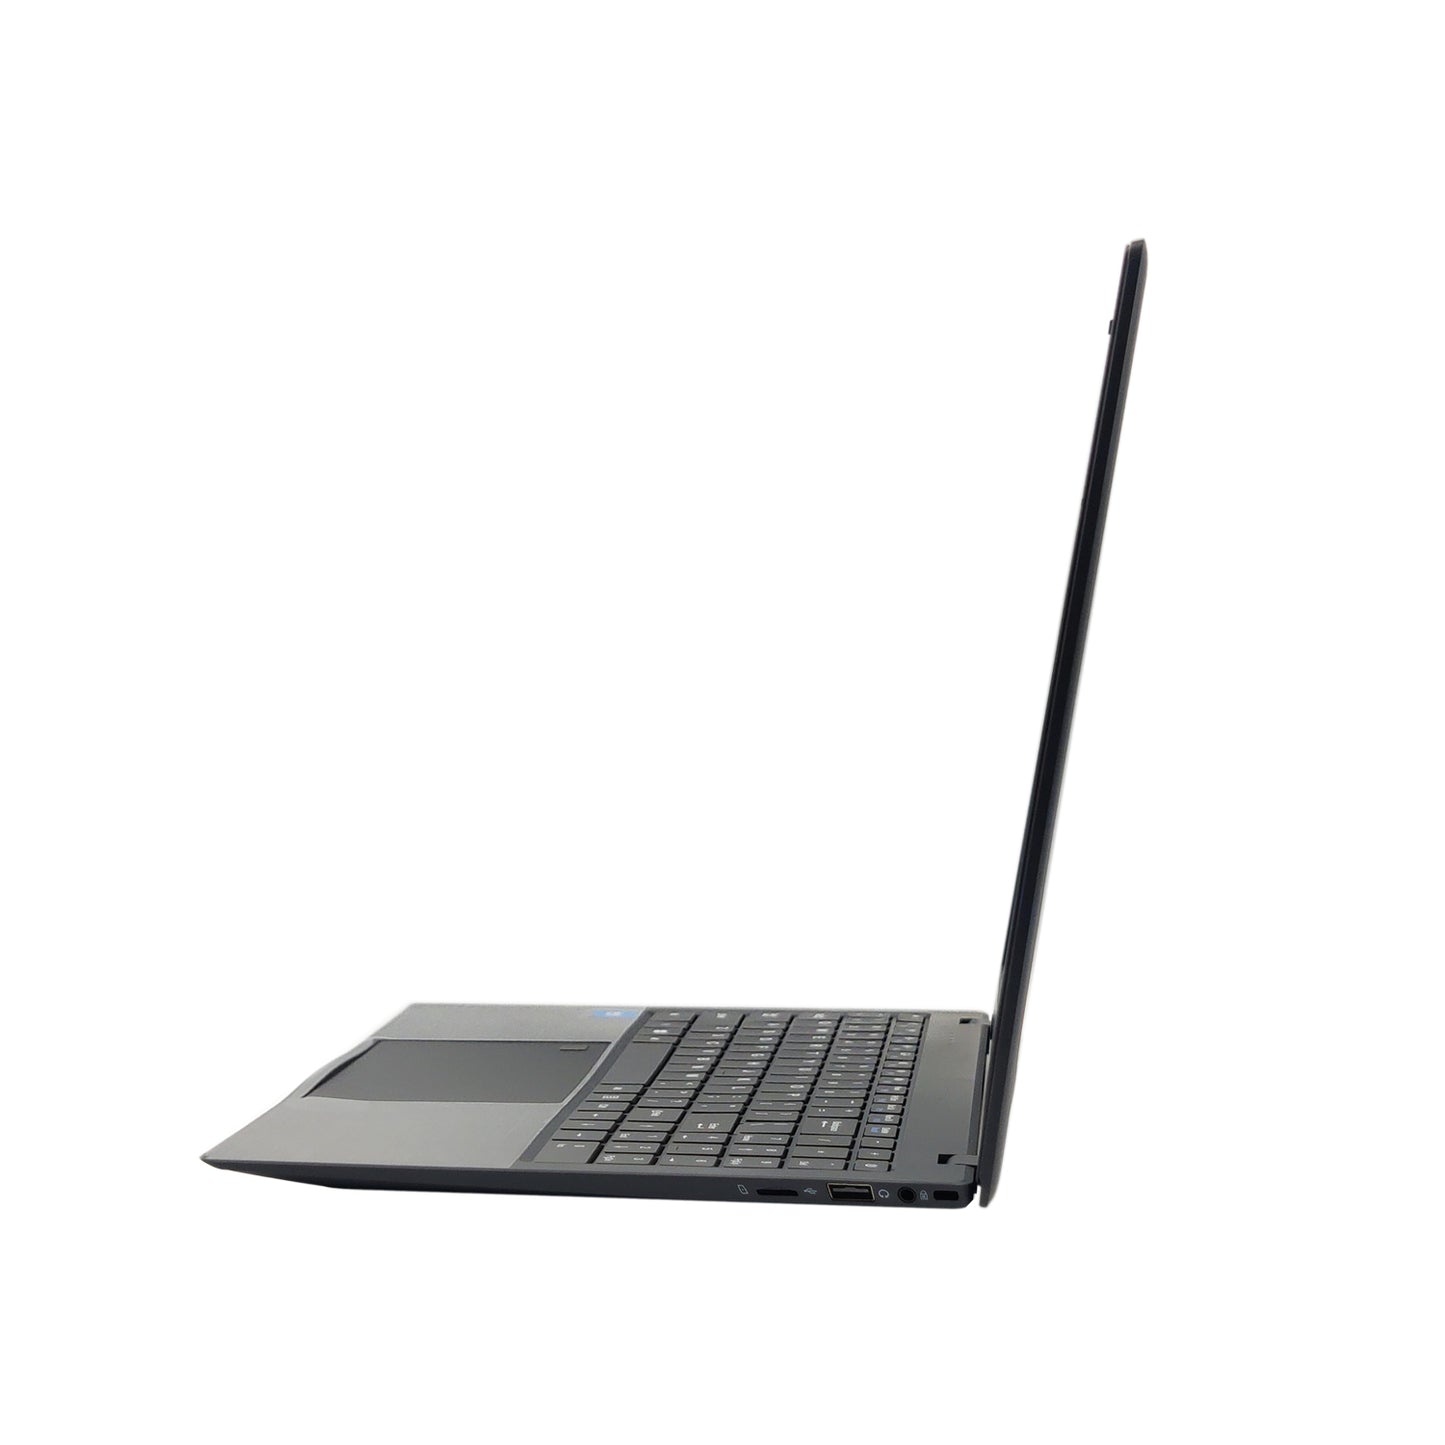 CL1514, notebook, laptop, portátil, ordenador portátil, windows notebook